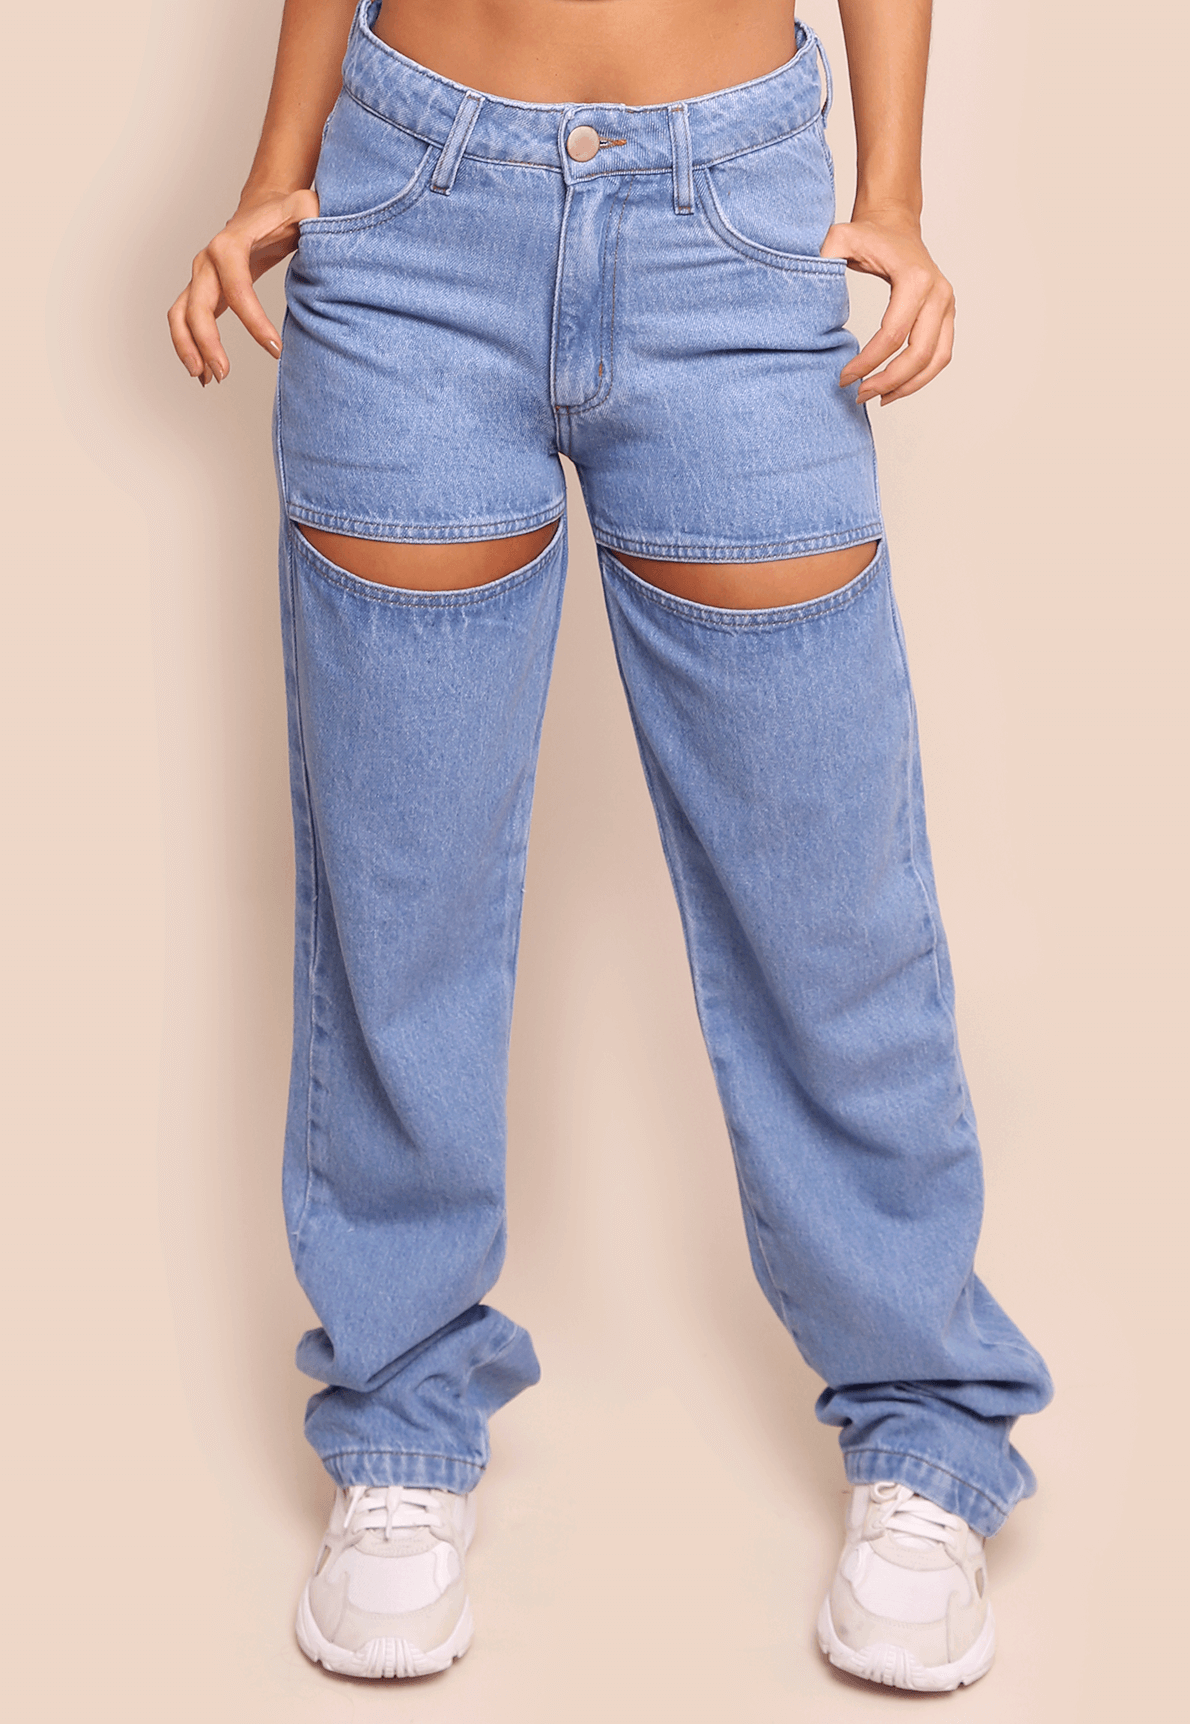 35928-calca-jeans-acapulco-mundo-lolita-04